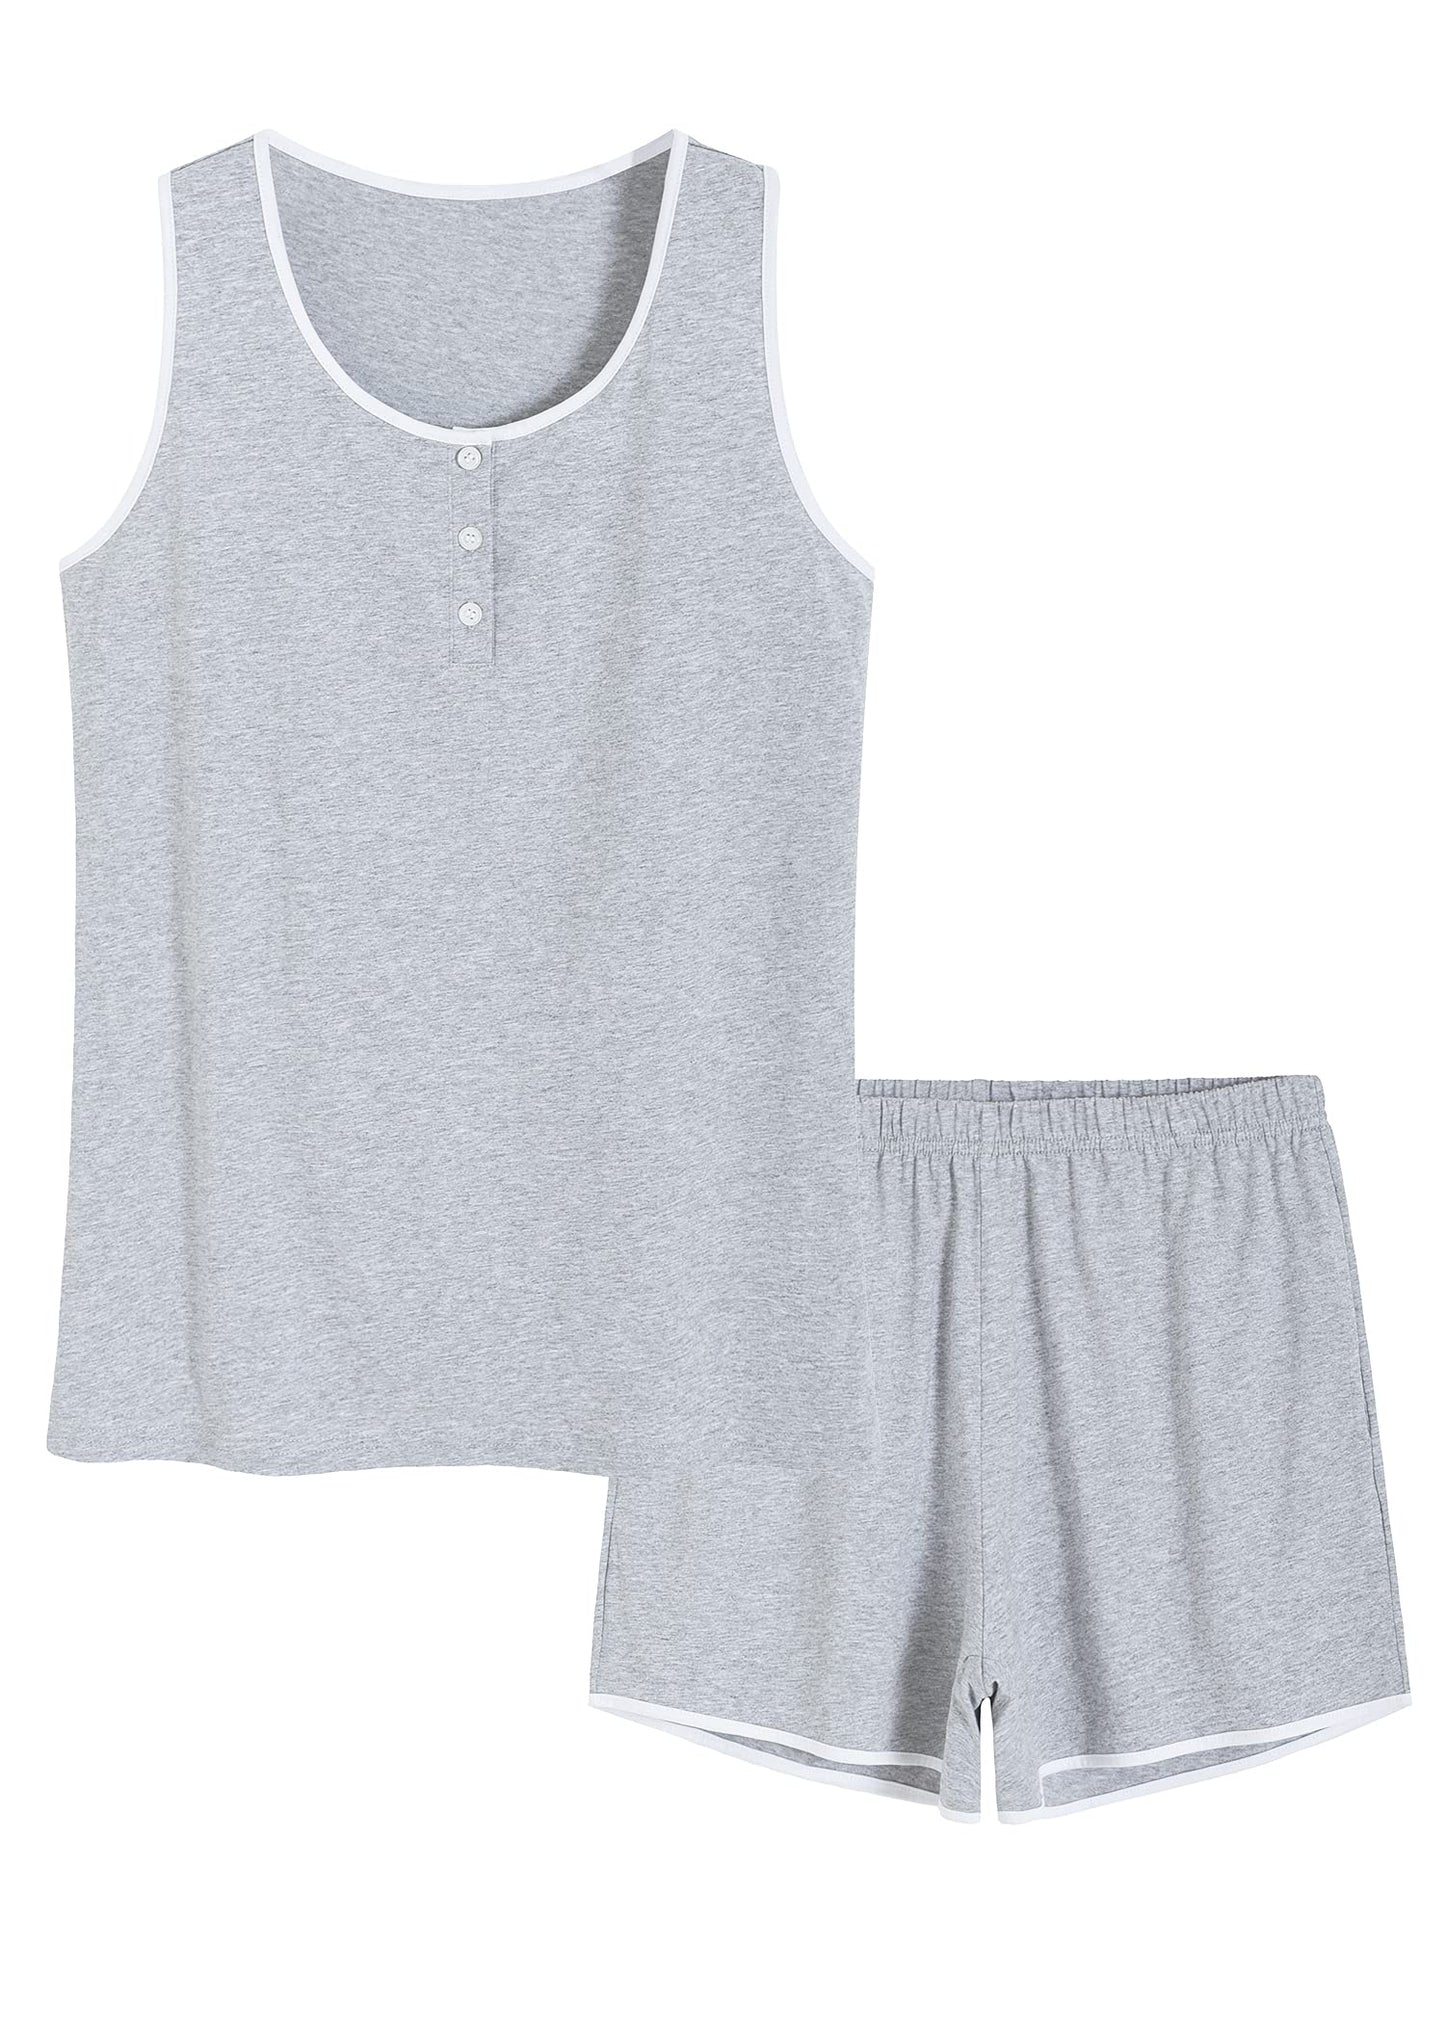 Women's Cotton Loungewear Set Sleep Tank Top with Pajama Shorts - Latuza